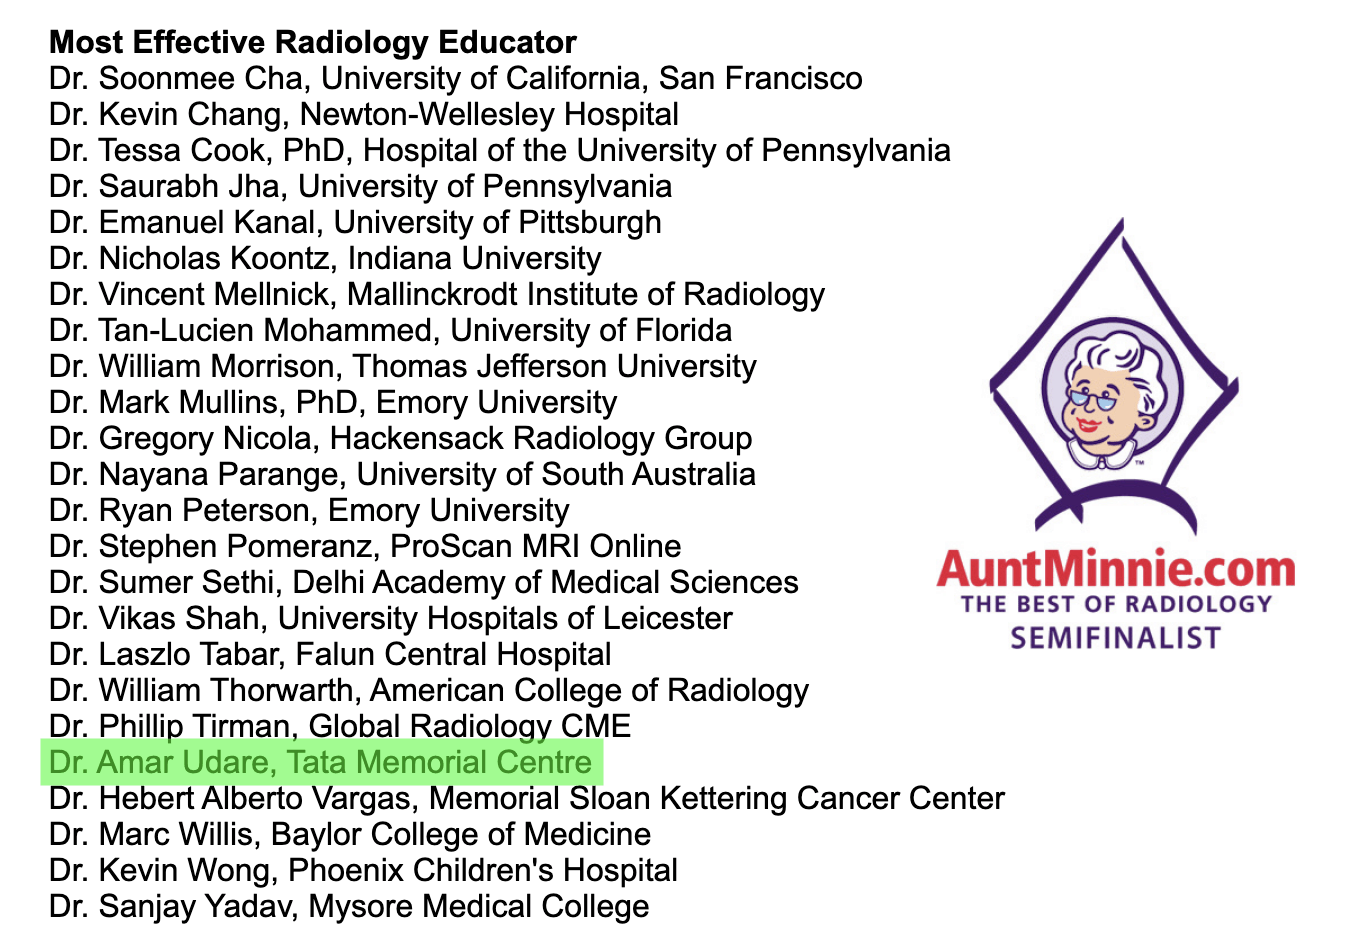 AuntMinnie 2018 Effective Radiology Educator